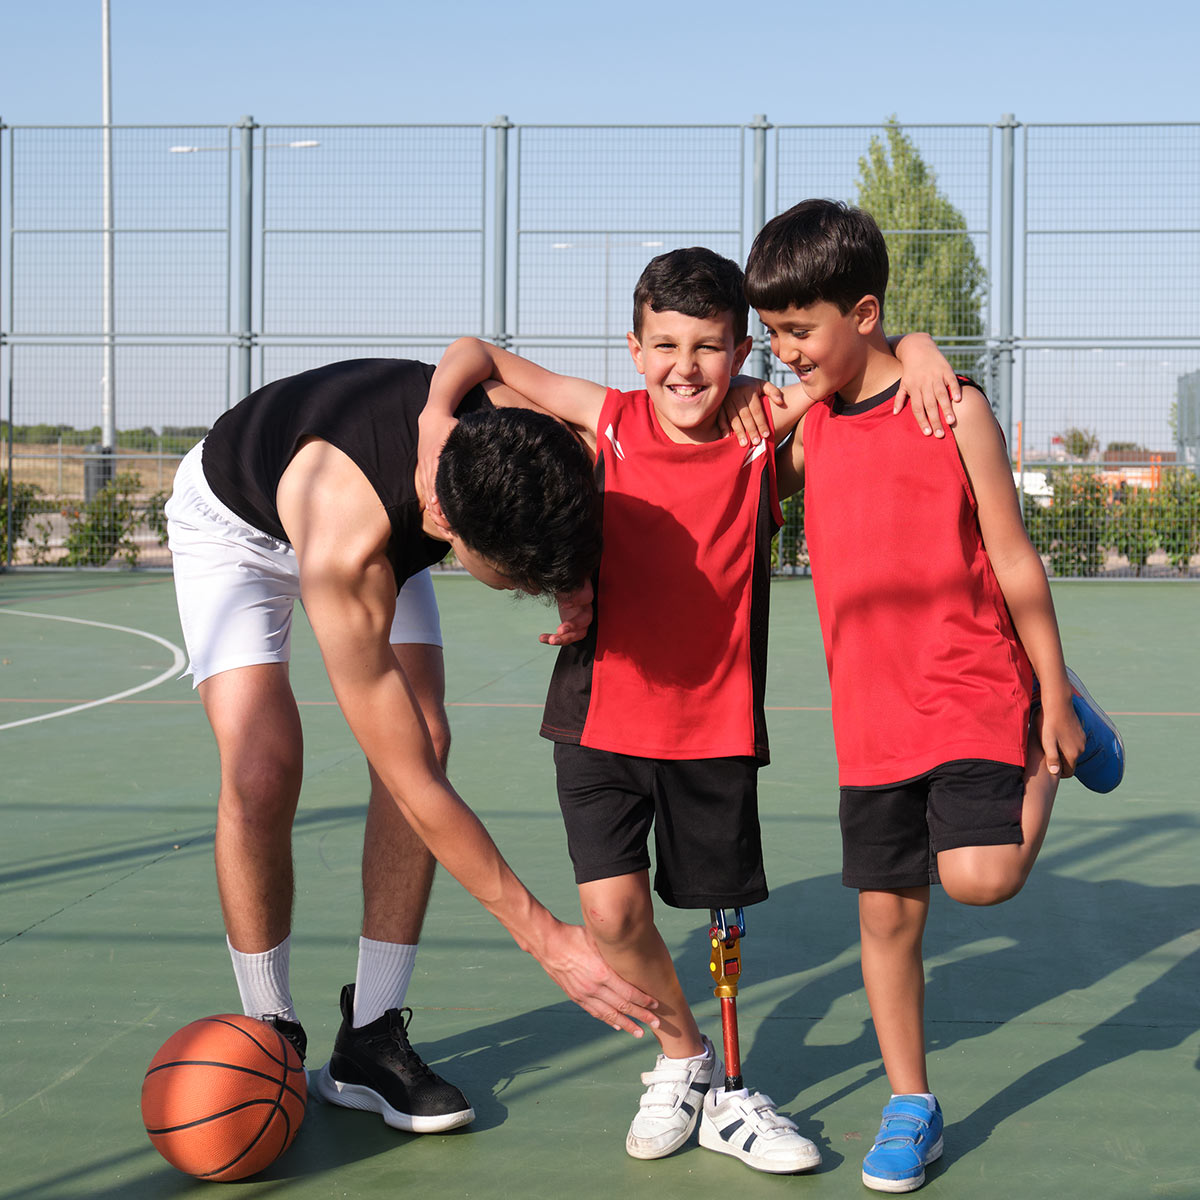 Boy with prosthetic leg playing basketball